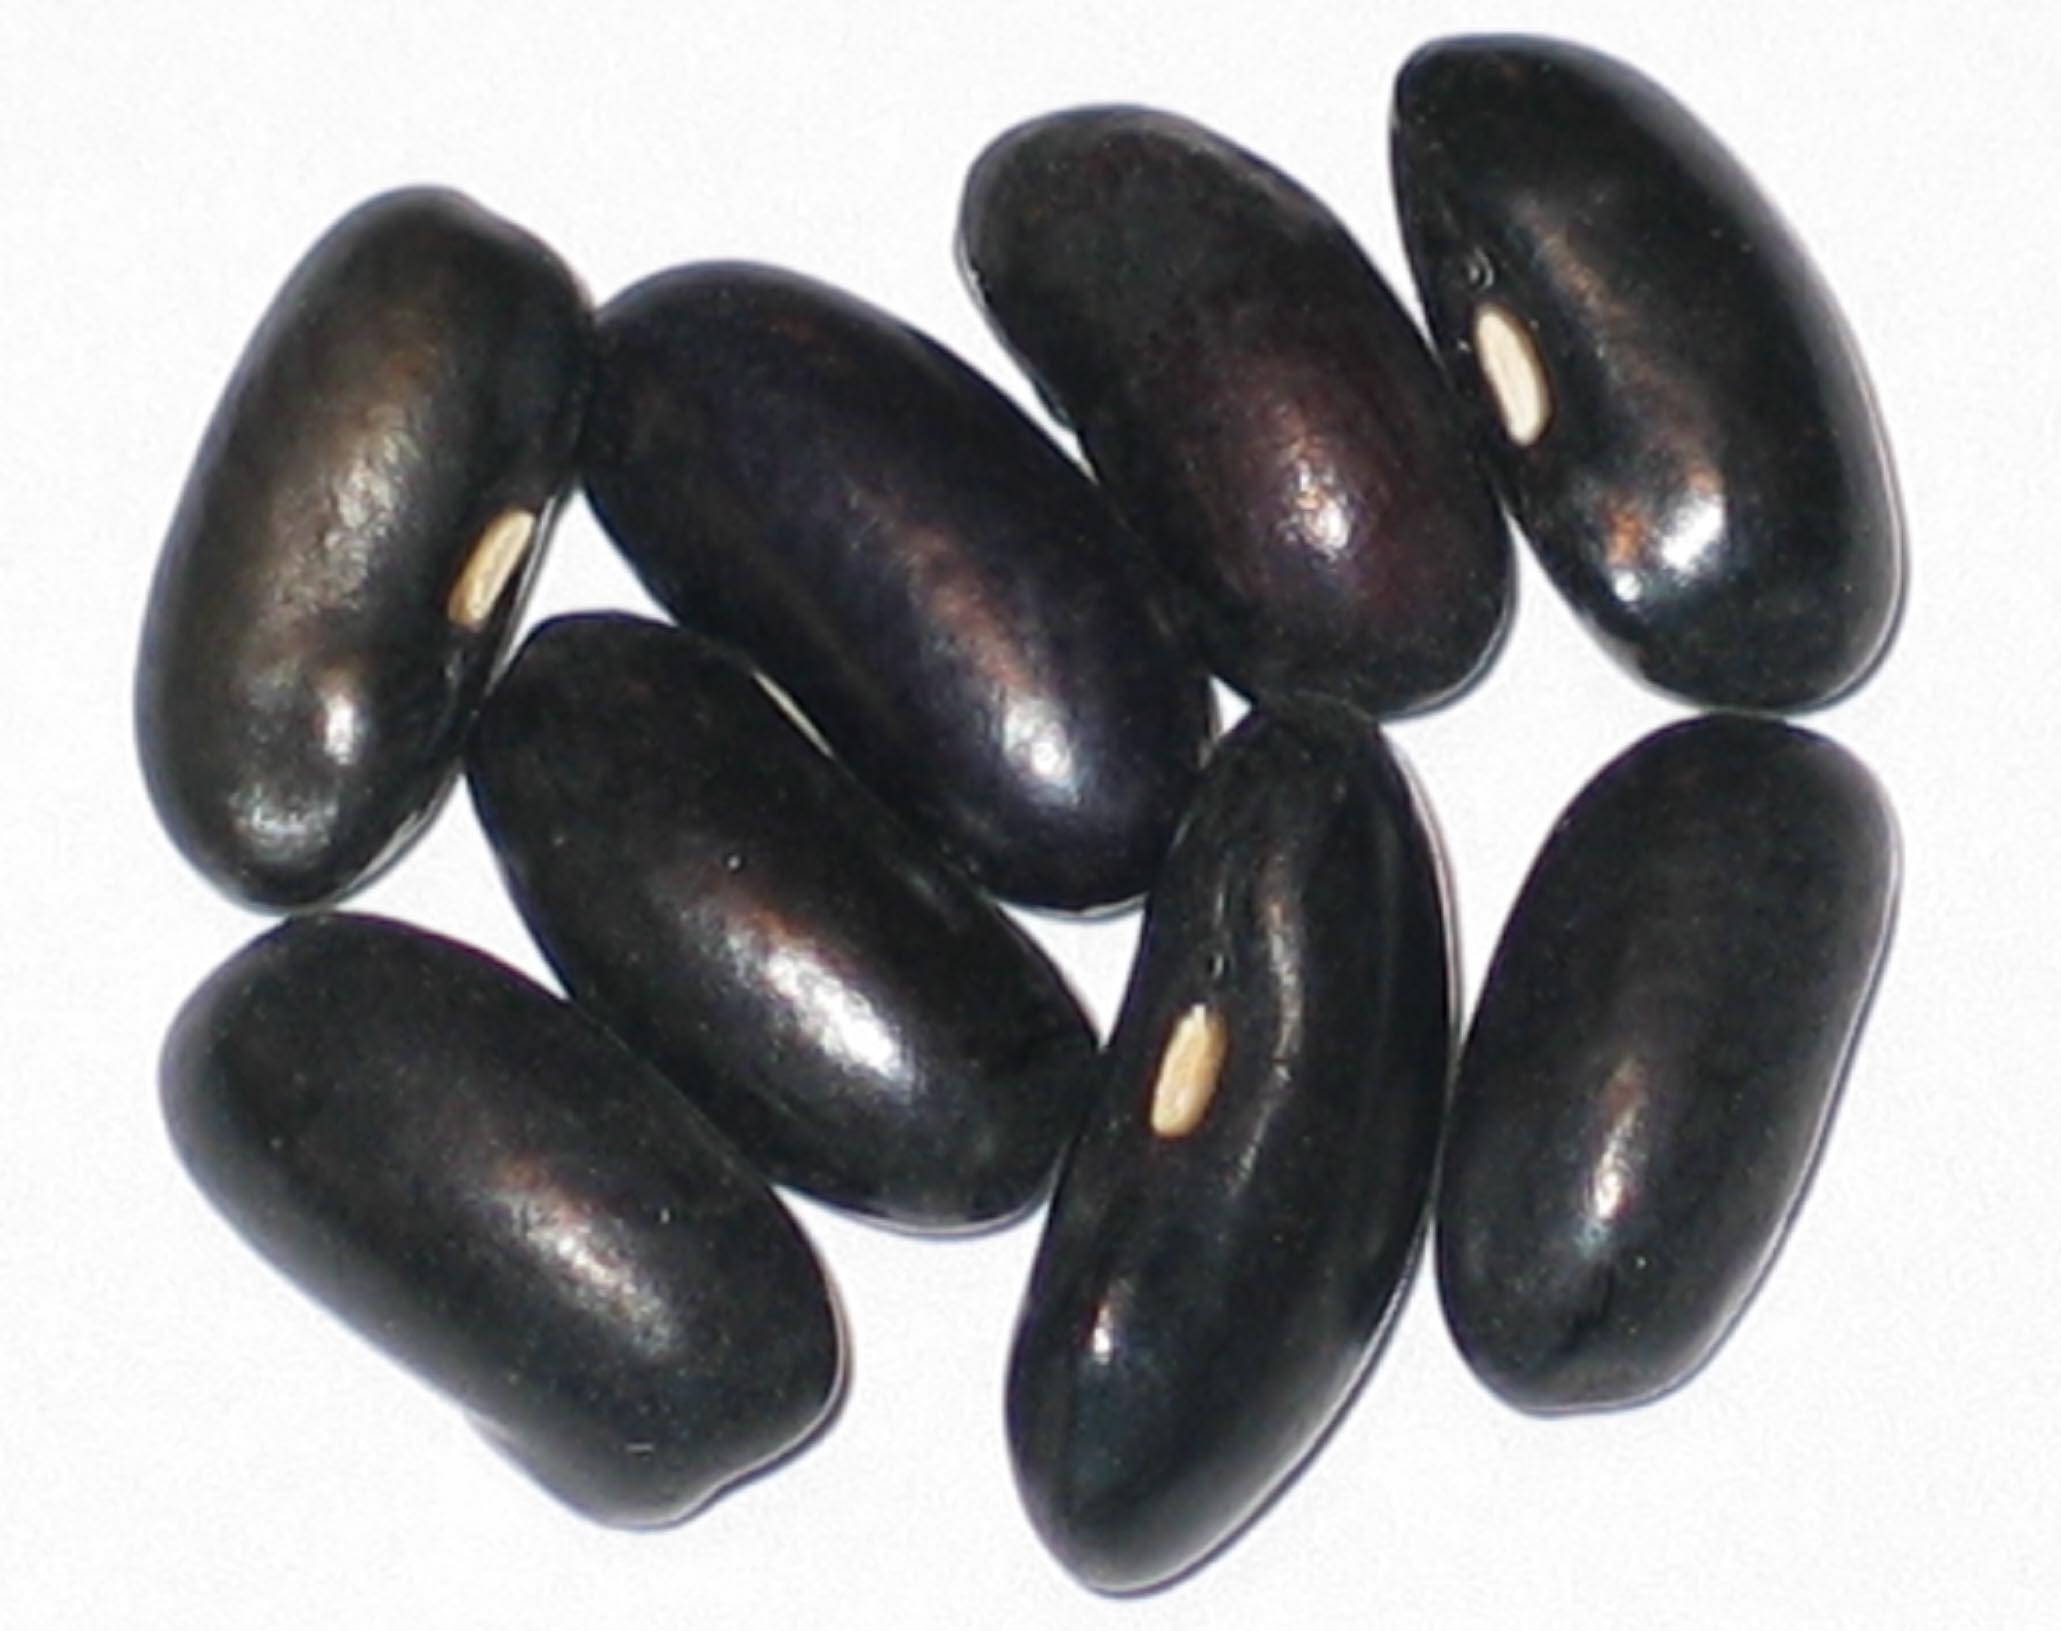 image of Illinois Wax beans